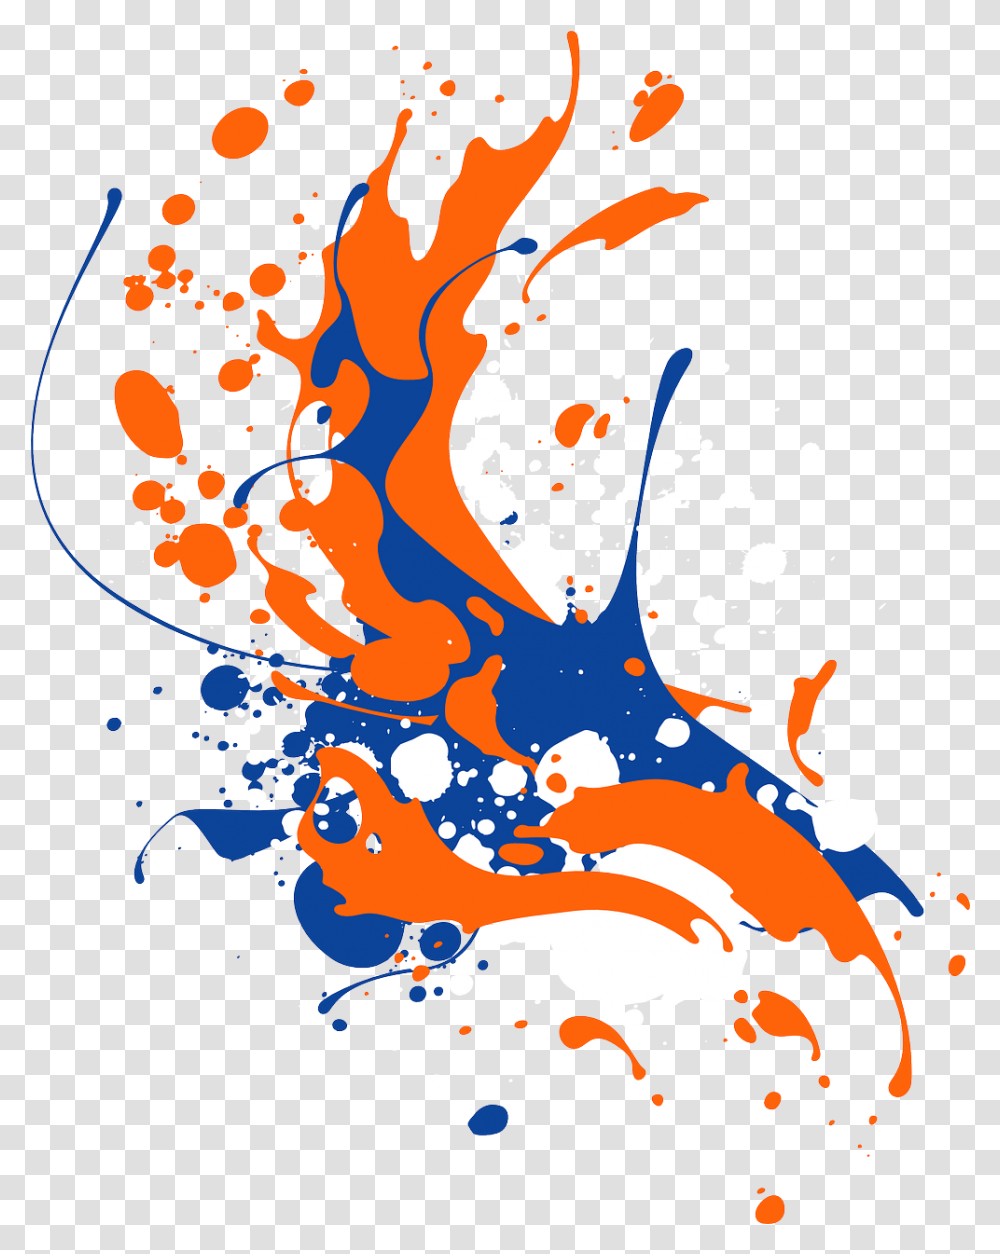 Ink Paint Splash Free Vector Graphic On Pixabay Vector Water Splash, Graphics, Art, Floral Design, Pattern Transparent Png